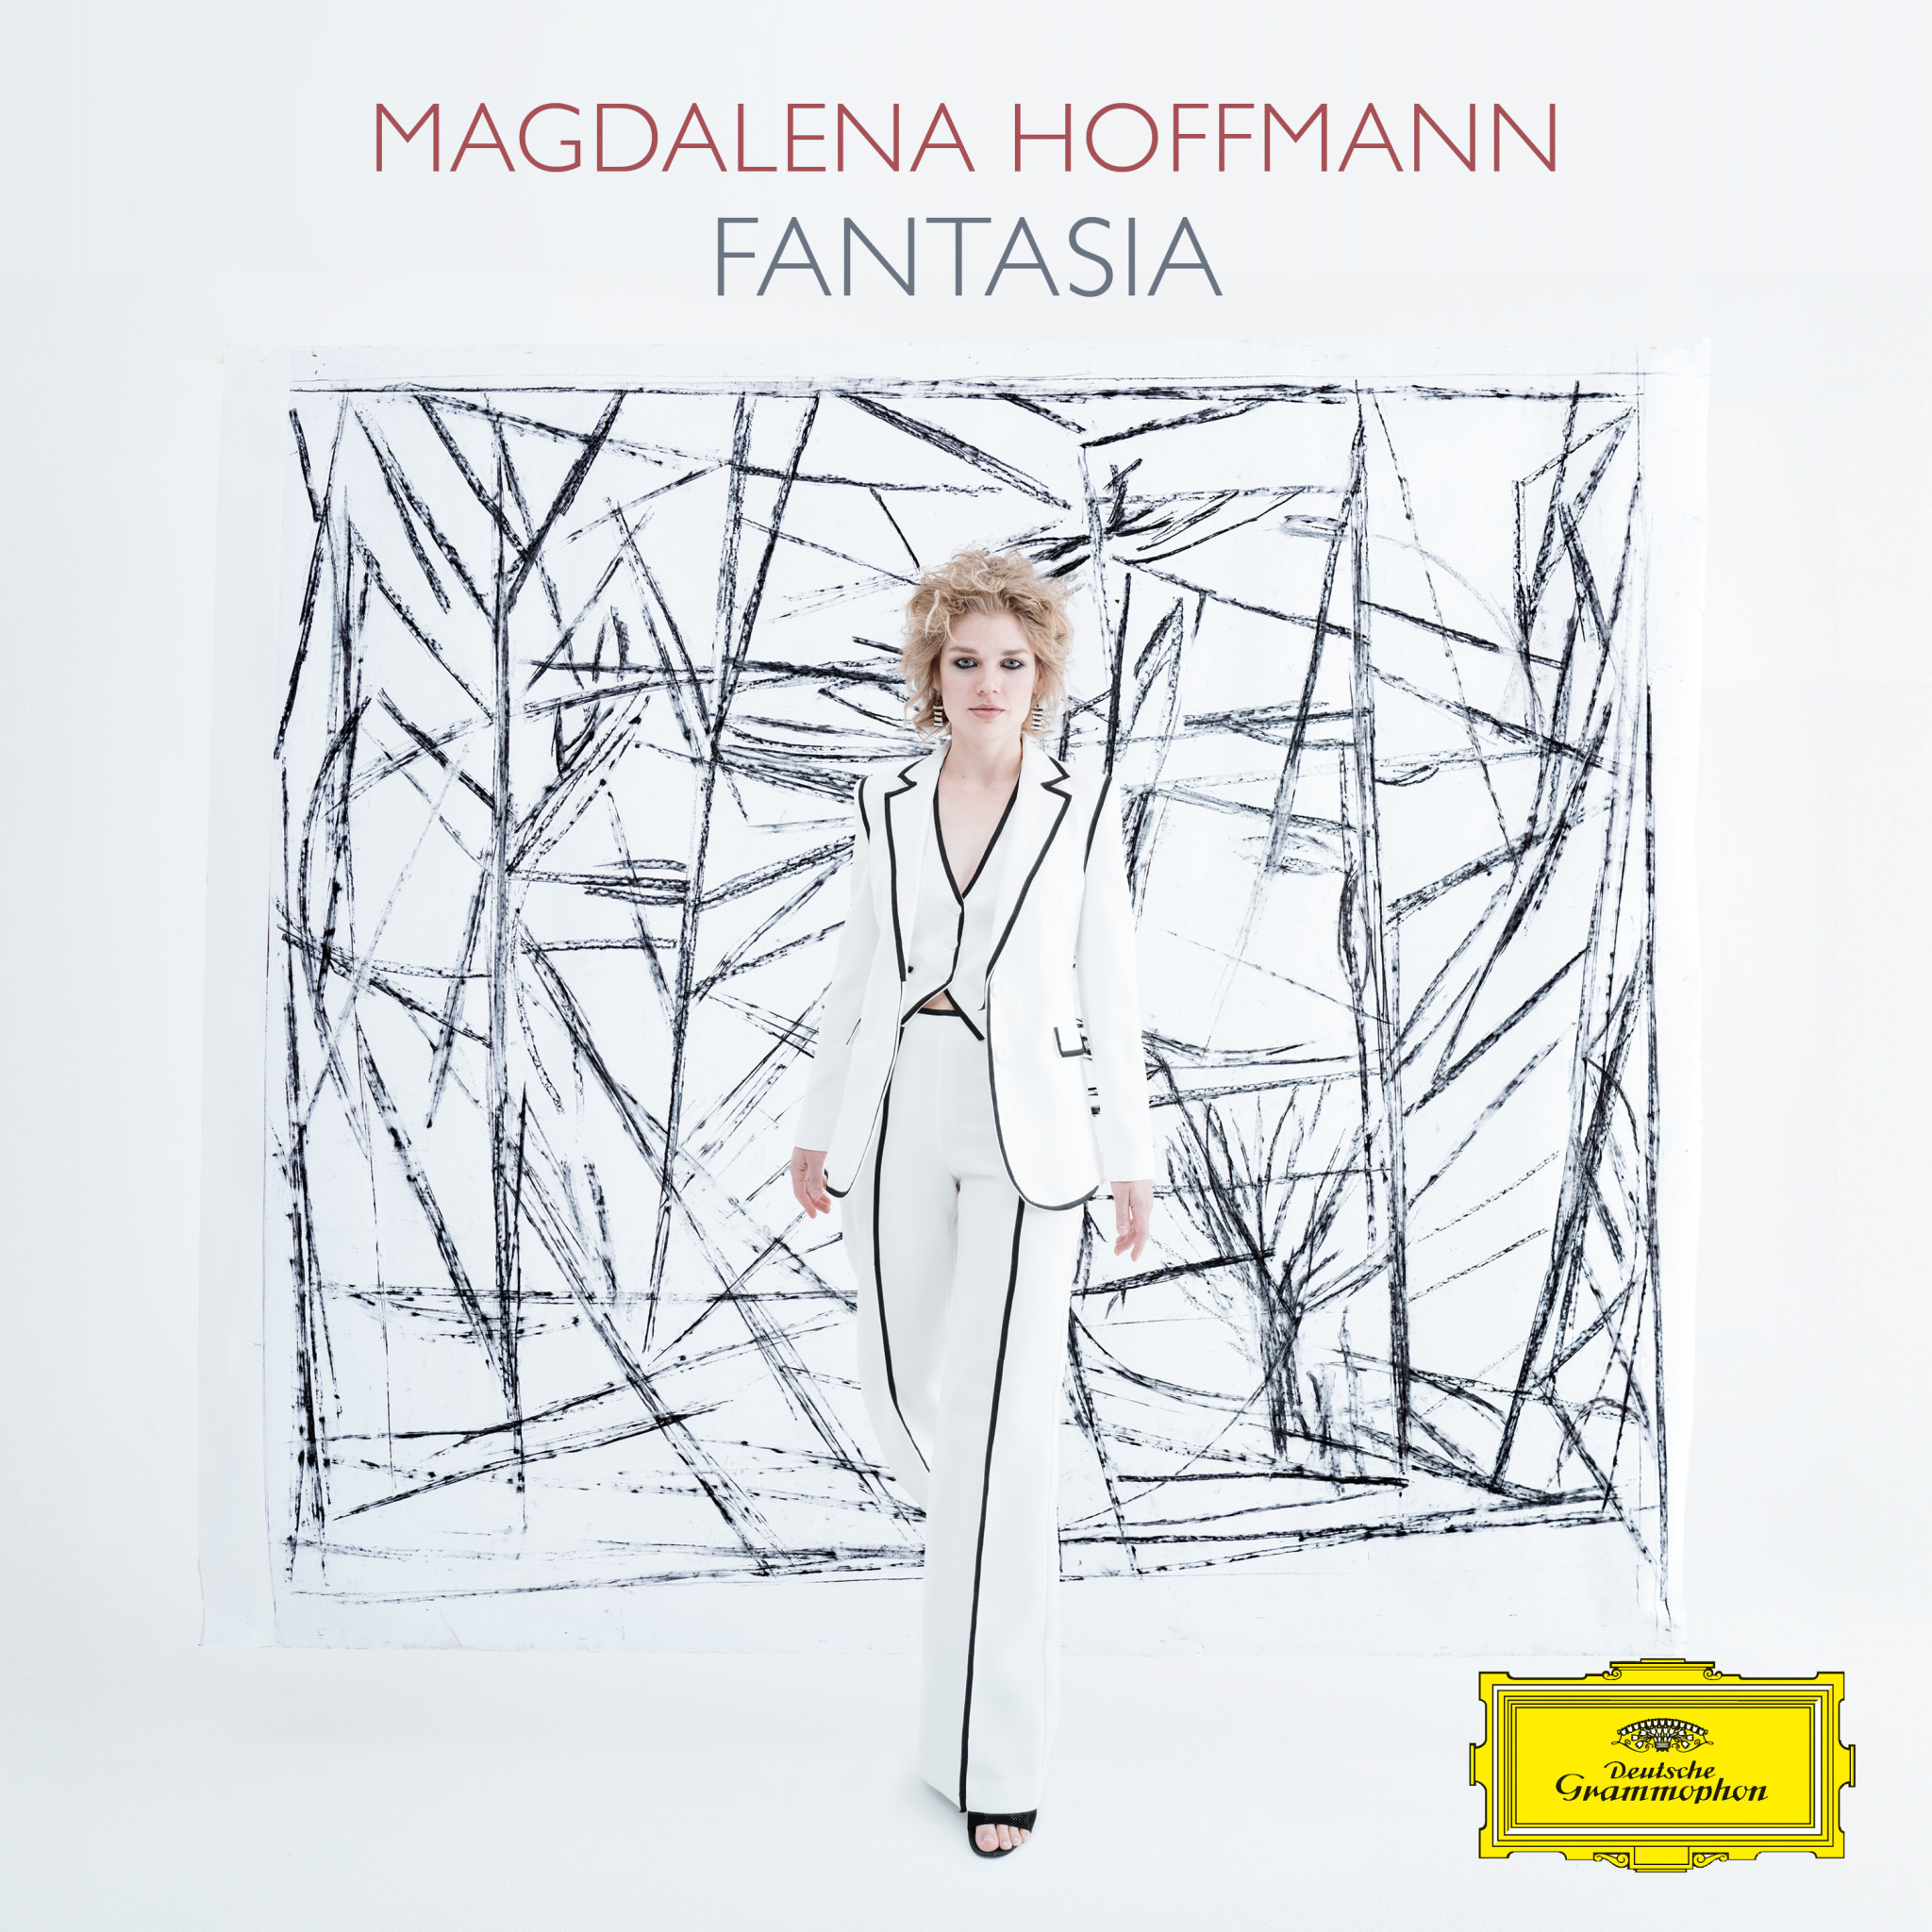 Magdalena Hoffmann: Fantasia